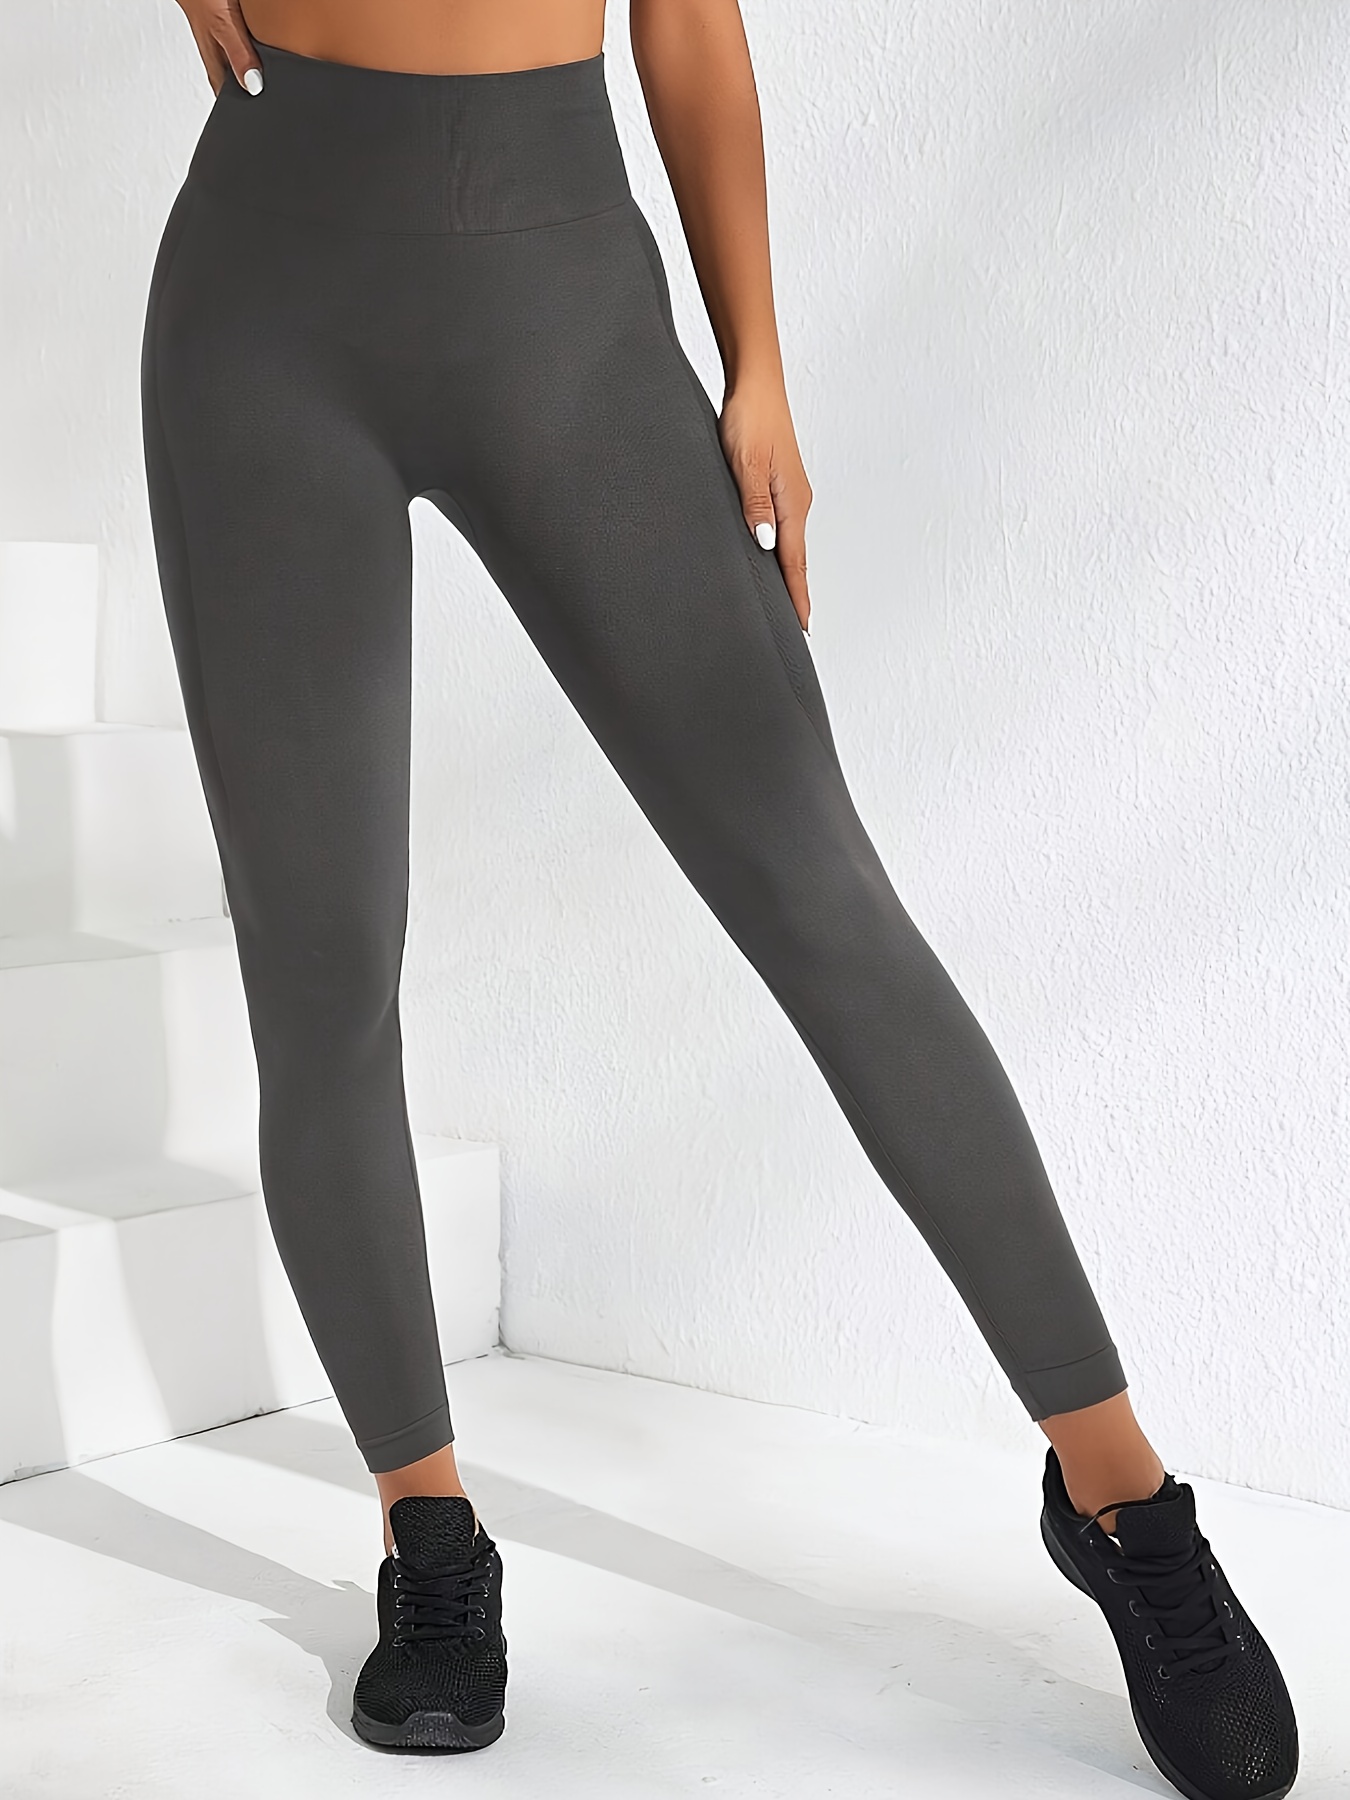 EHQJNJ Petite Yoga Pants Seamless Solid Color Skinny High Waist